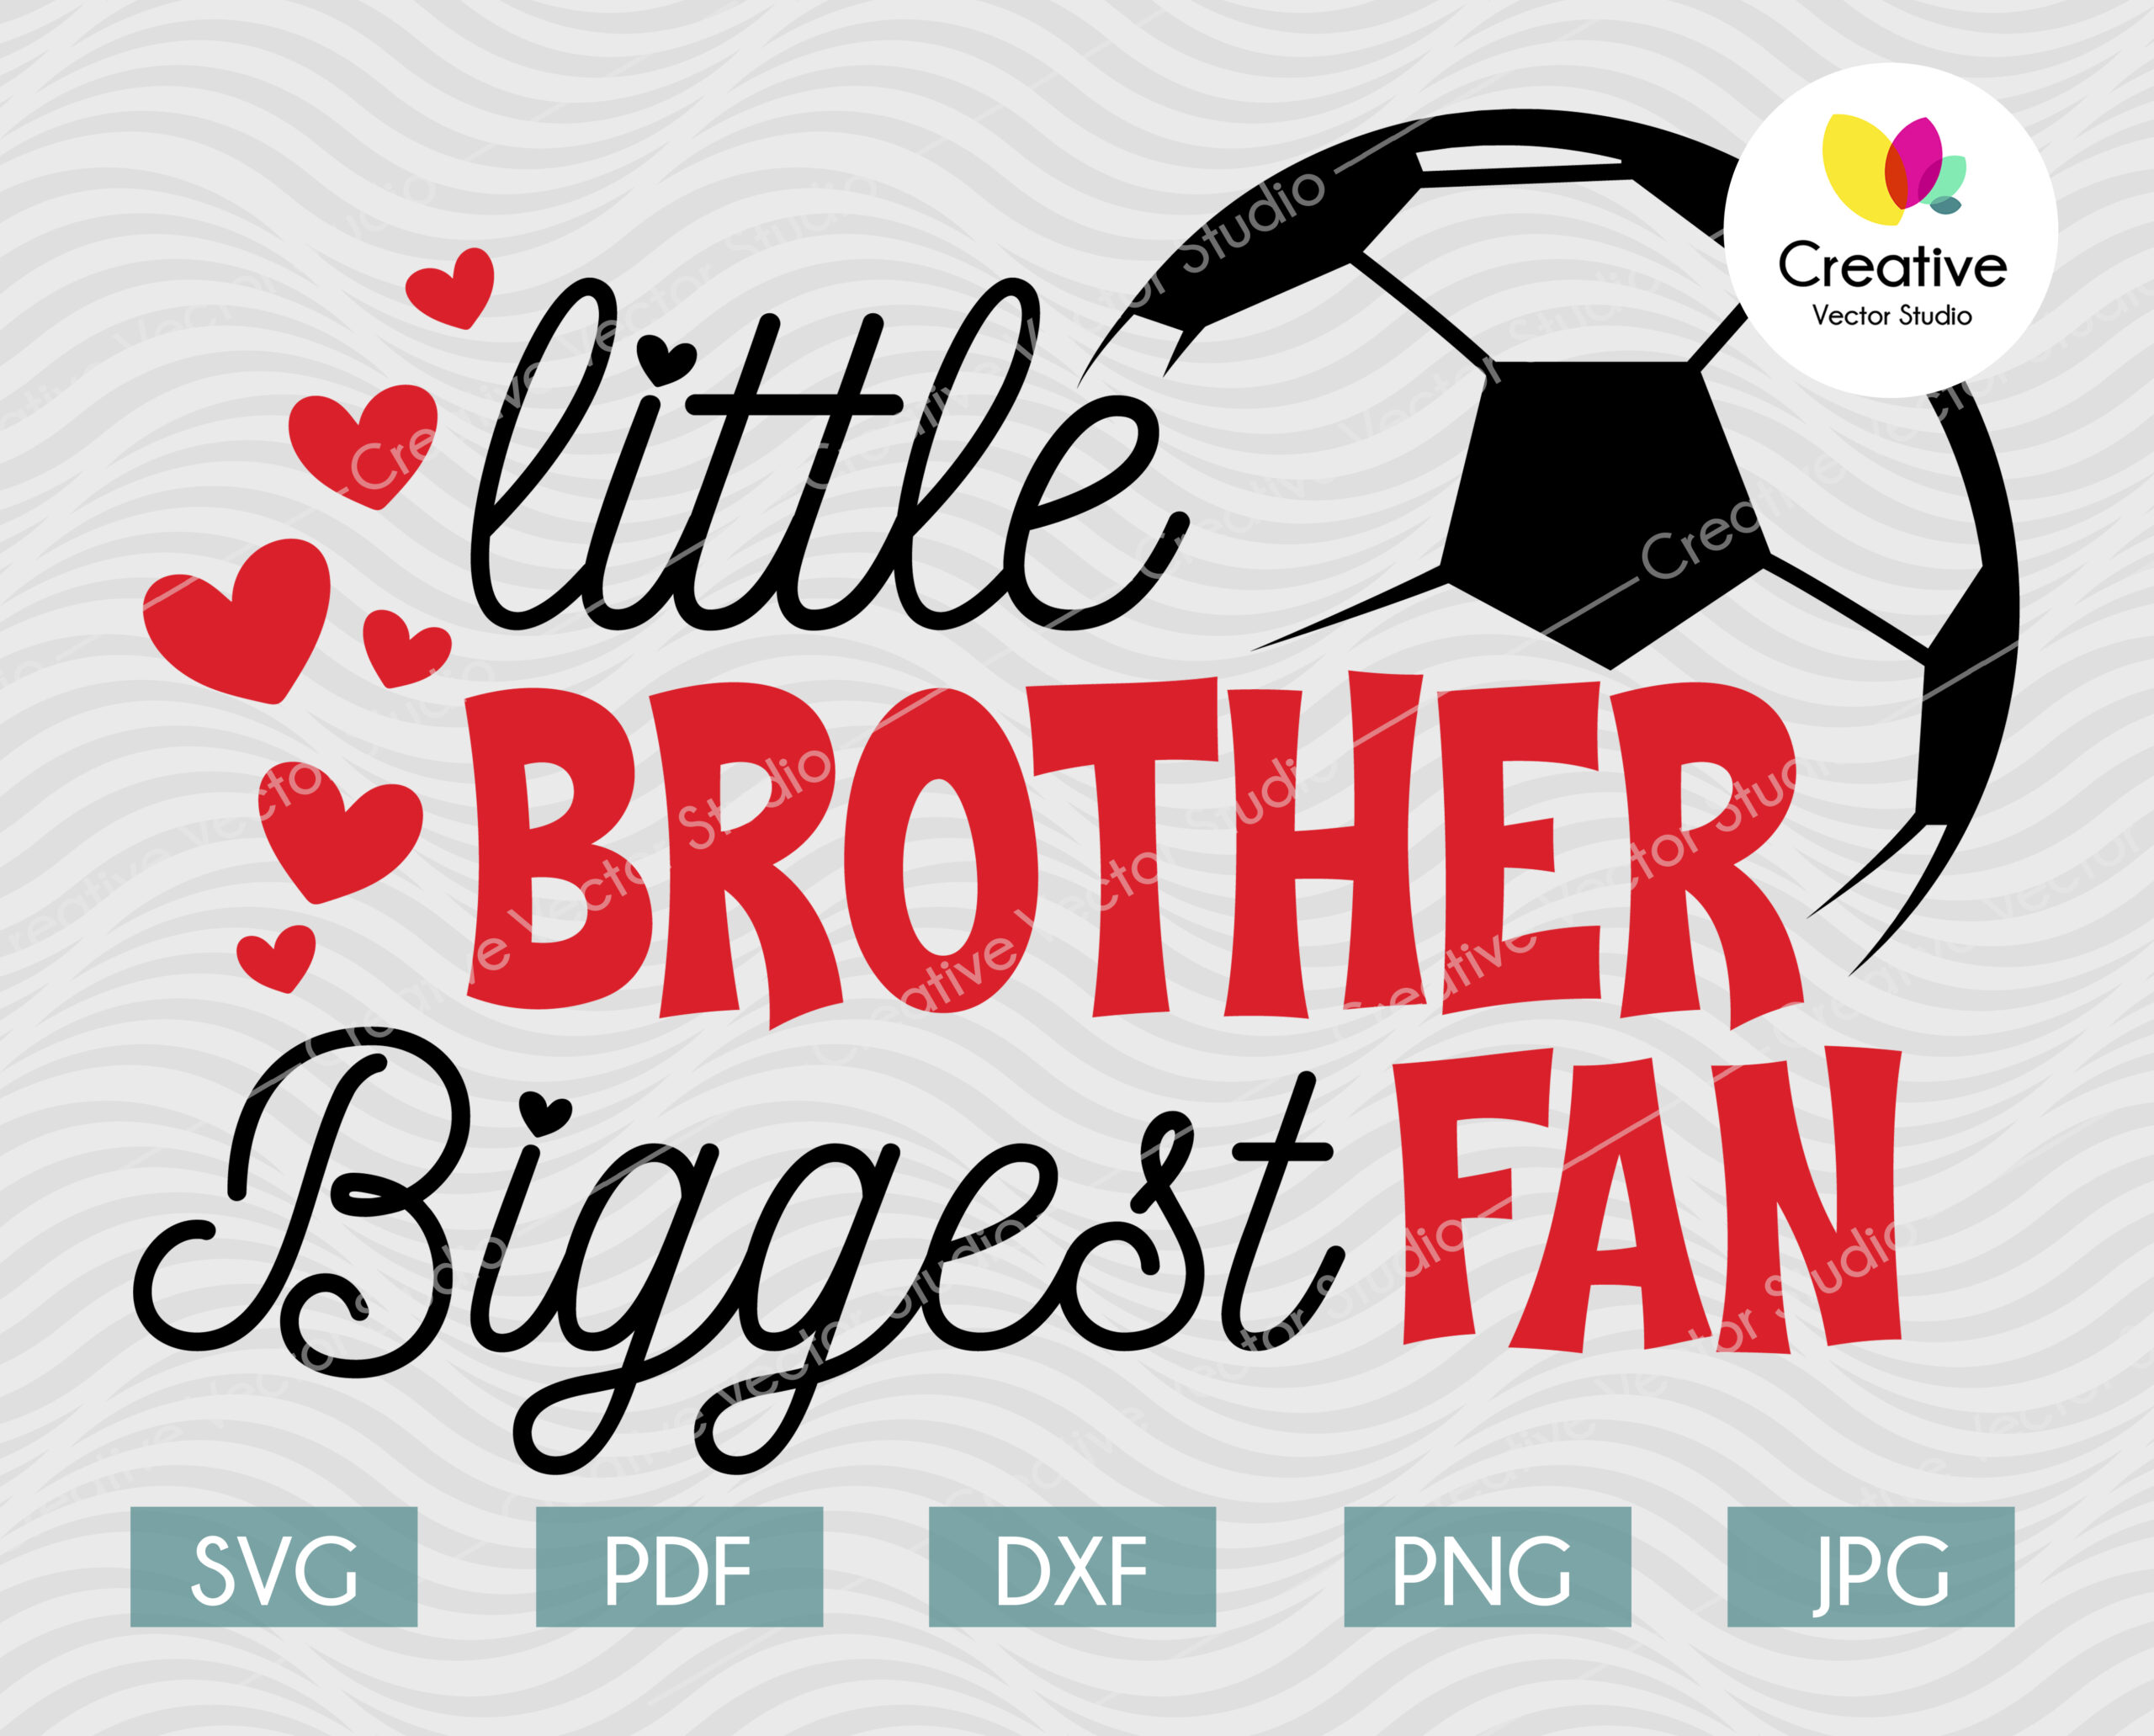 Little Brother Biggest Fan Soccer SVG - Creative Vector Studio